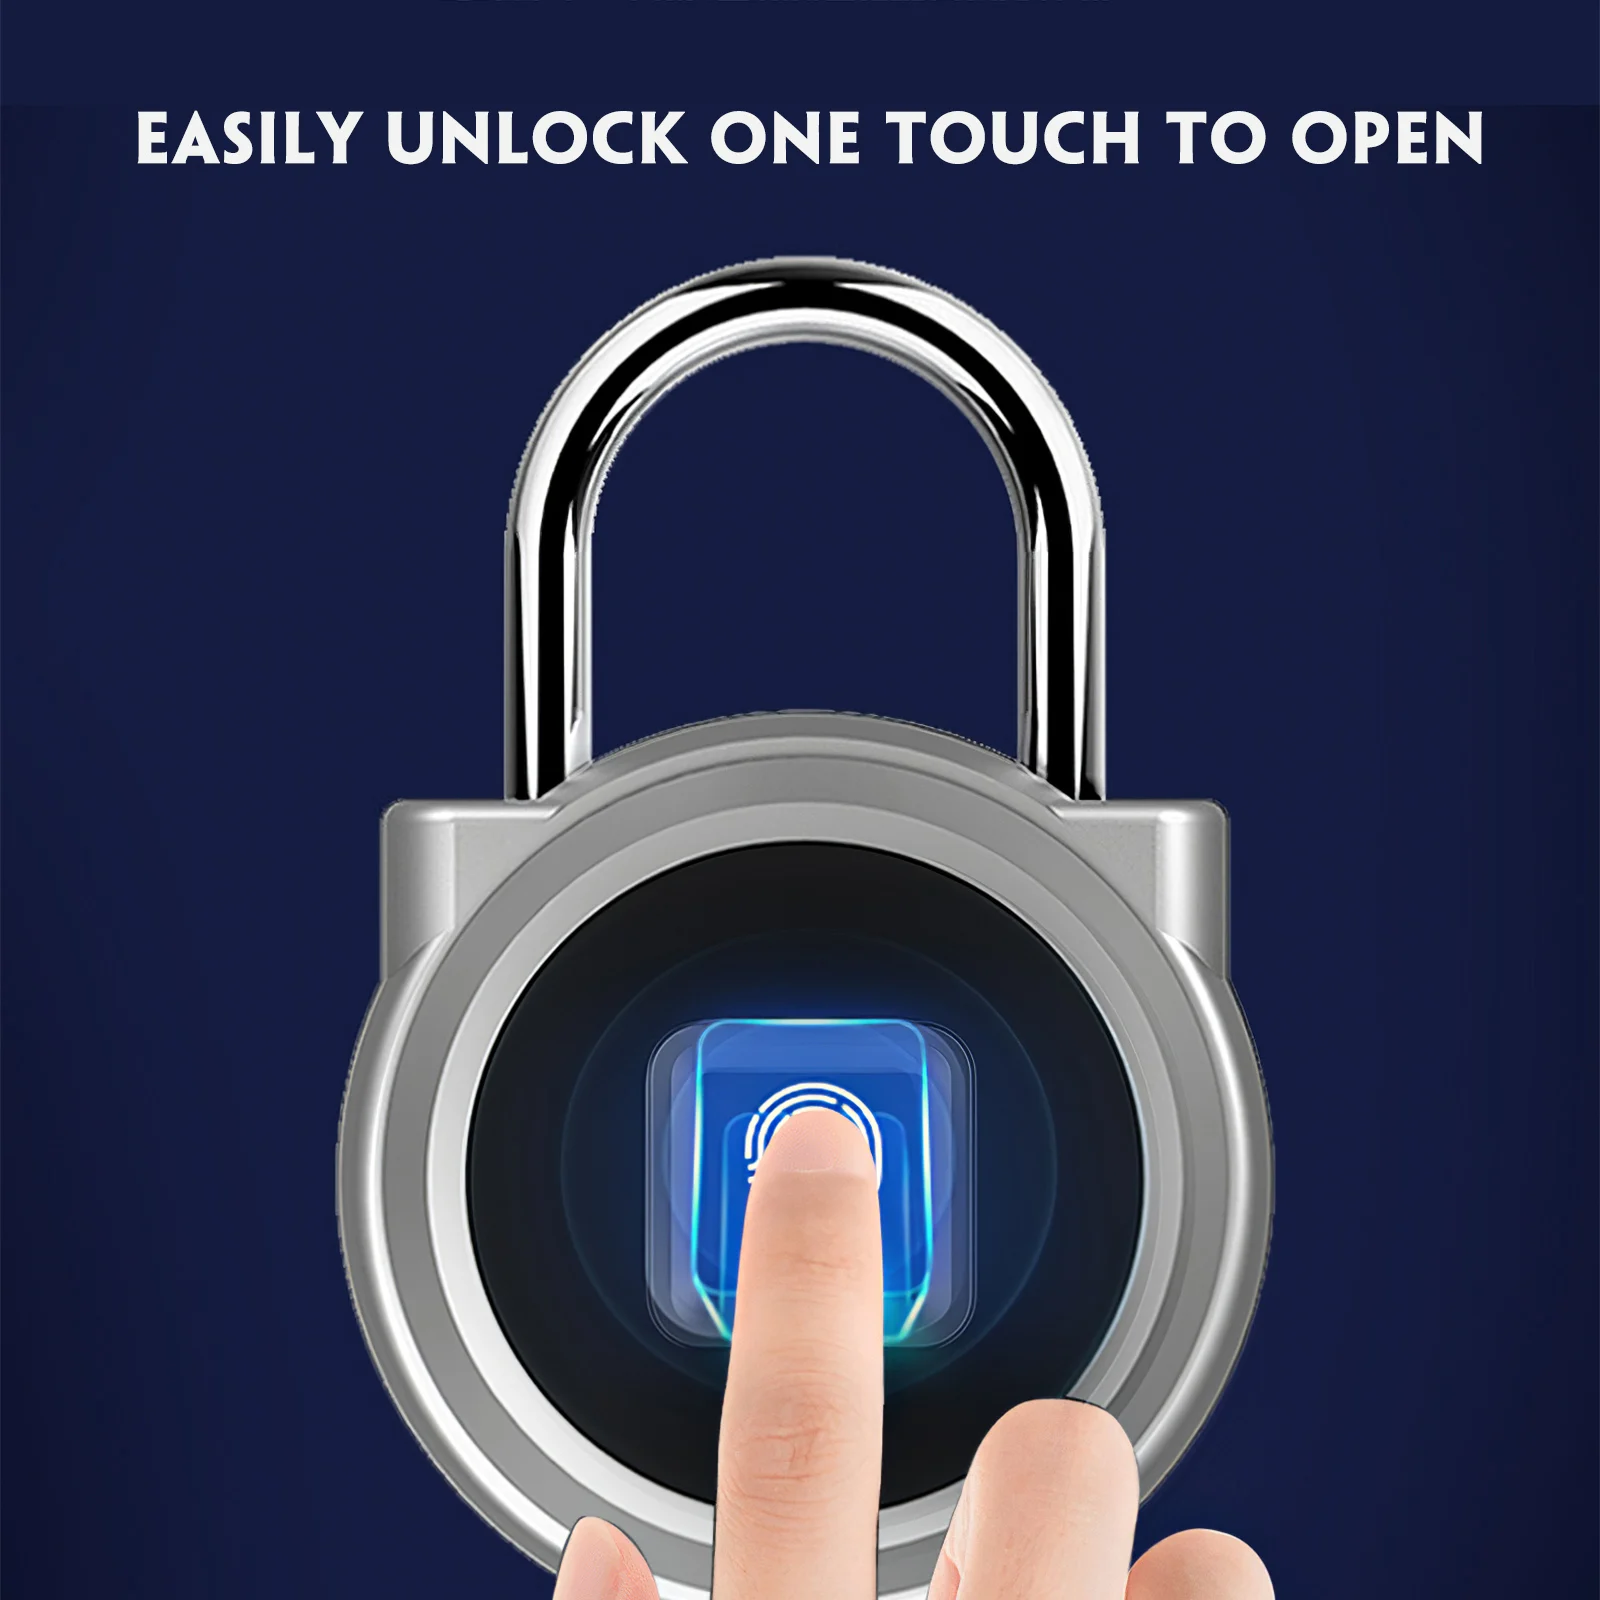 

Keyless USB Charging Door Lock Fingerprint Smart Padlock Quickly Unlock Zinc Alloy Metal Self-Imaging Chip For Locker Anti-Theft